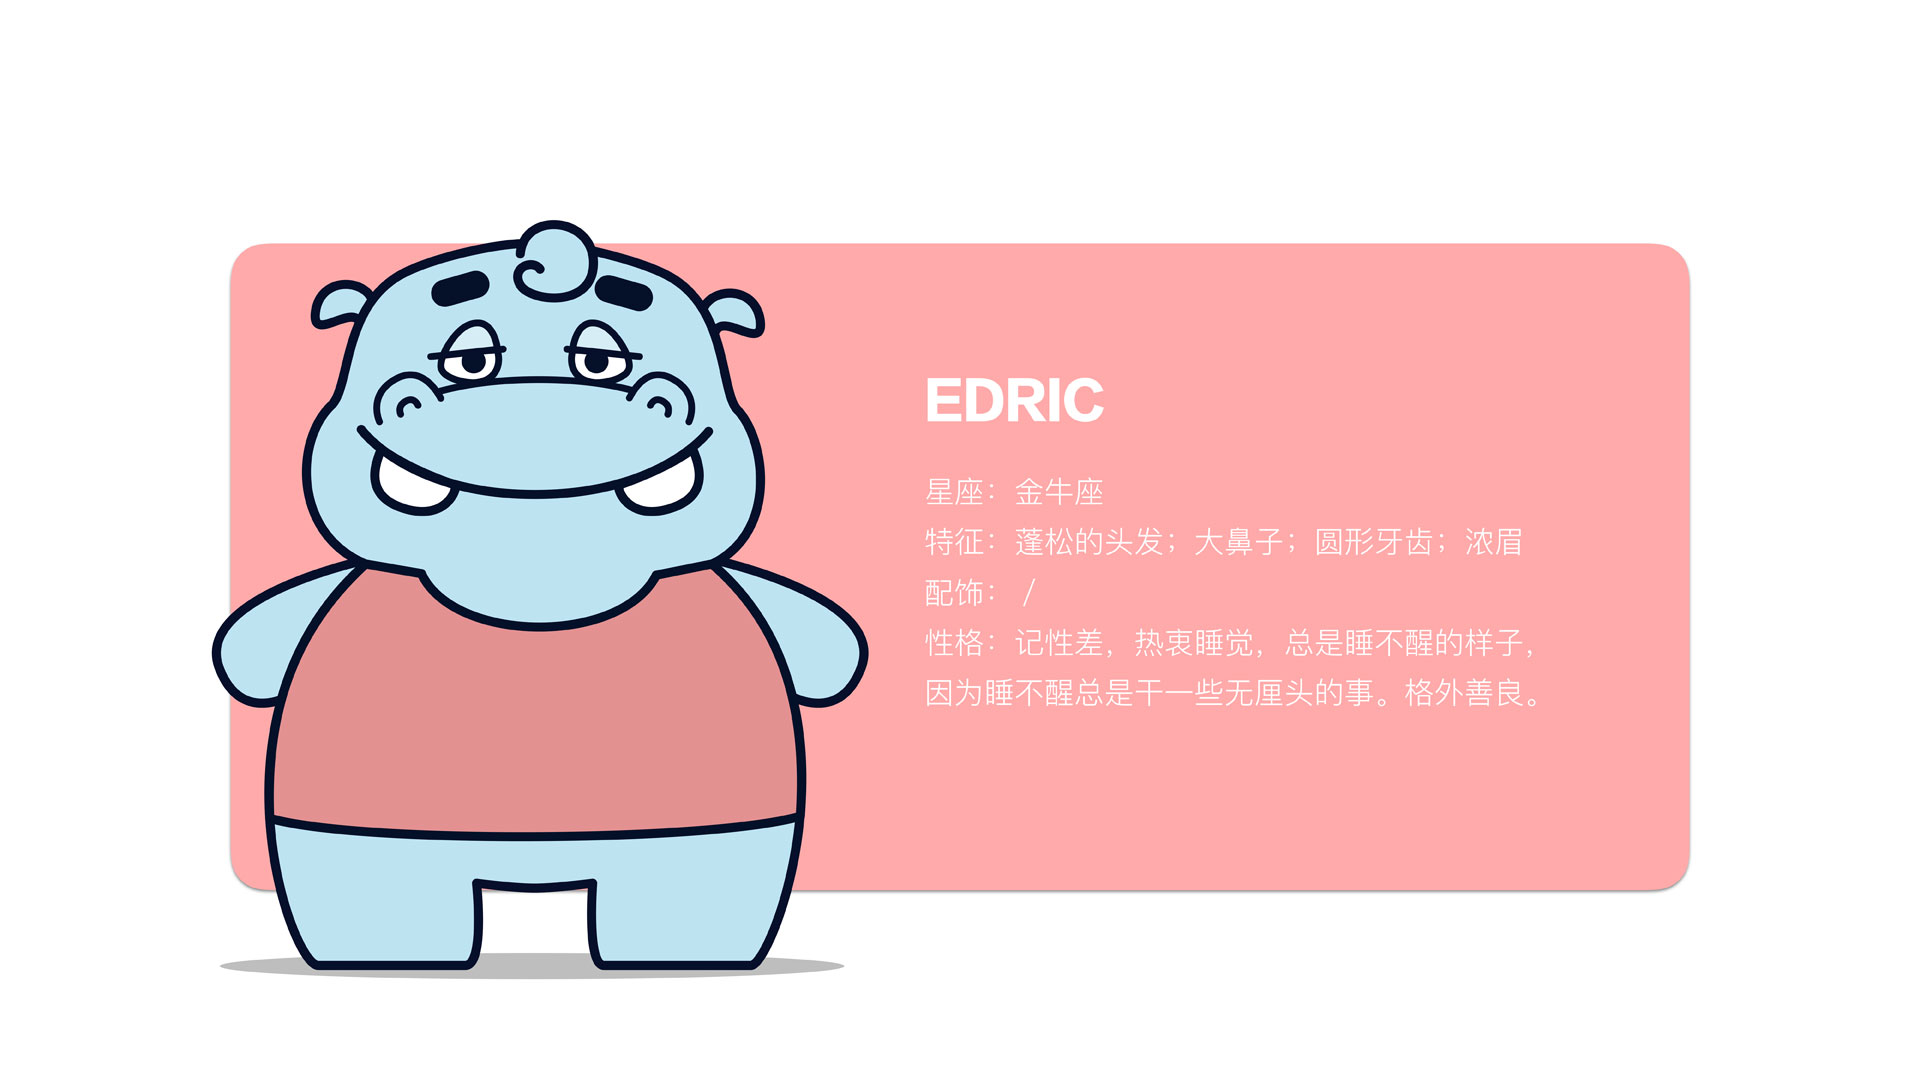 ileven坚果吉祥物形象设计-EDRIC